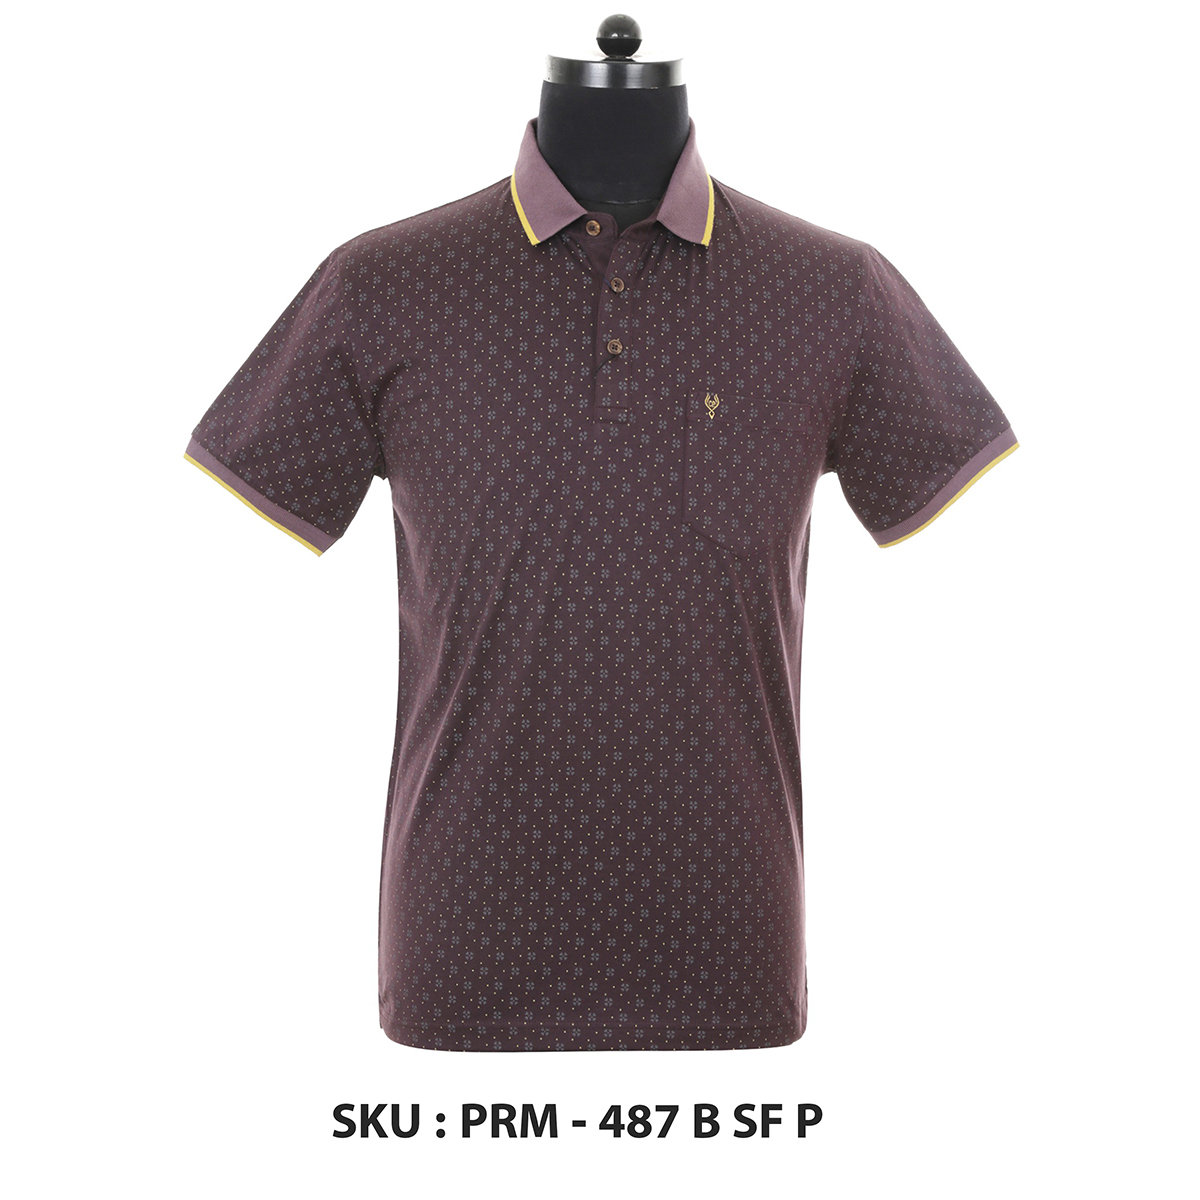 Classic Polo Mens T Shirt Prm - 487 B Sf P Brown L